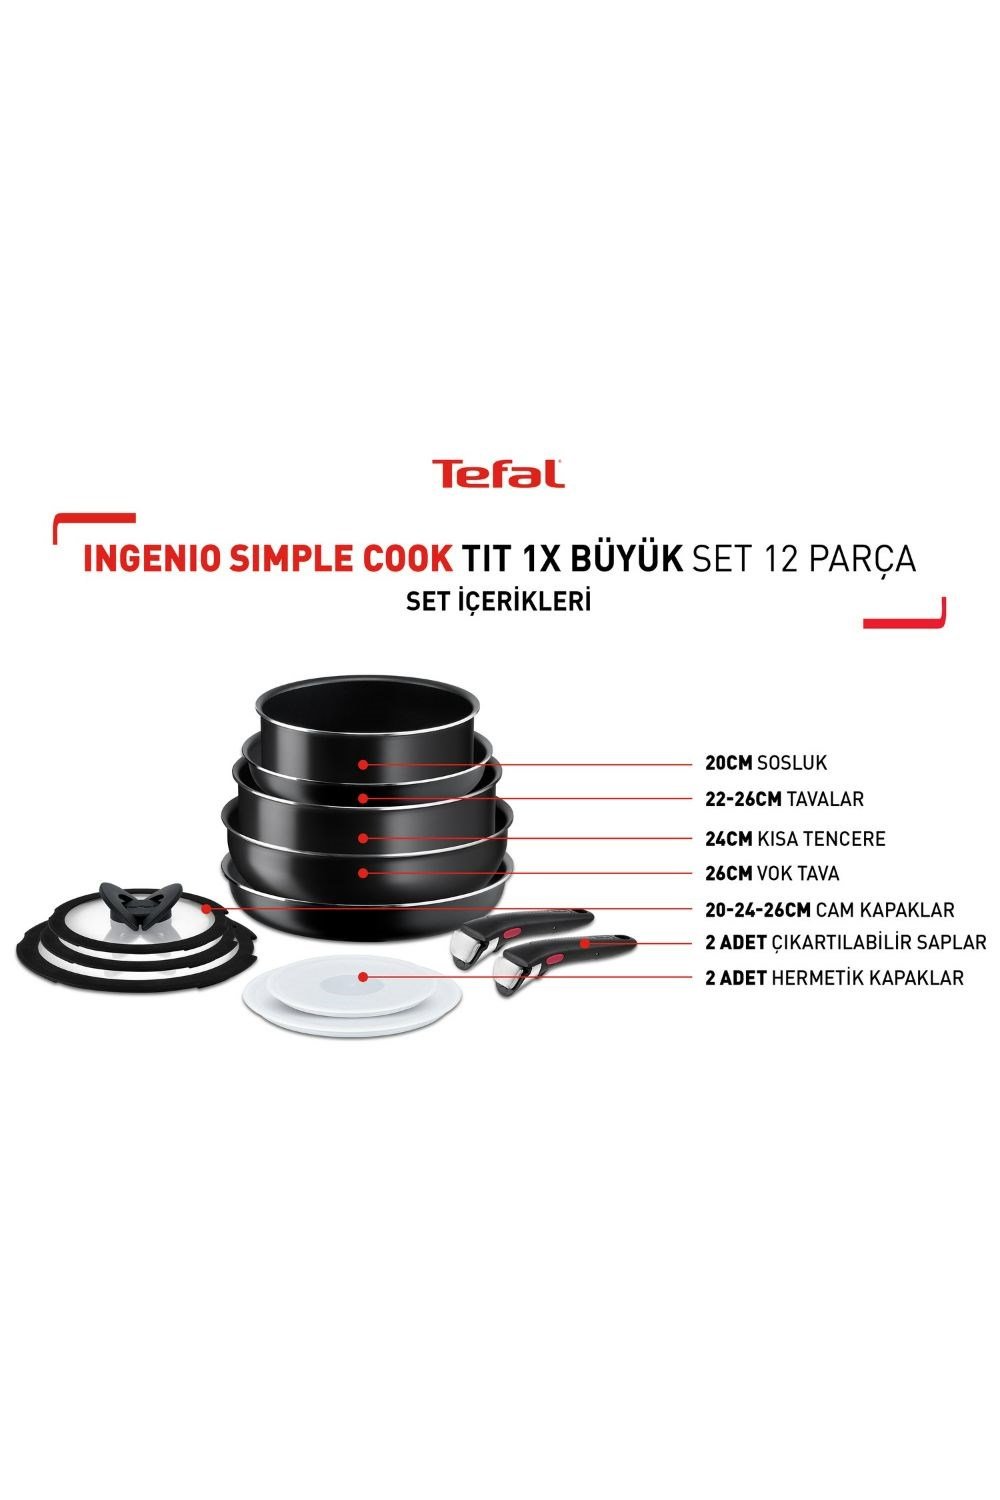 Tefal L15392 Ingenio Tit 1X SimpleCook Tava ve Tencere Seti 12 Parça  (Teşhir & Outlet) - 2100125537